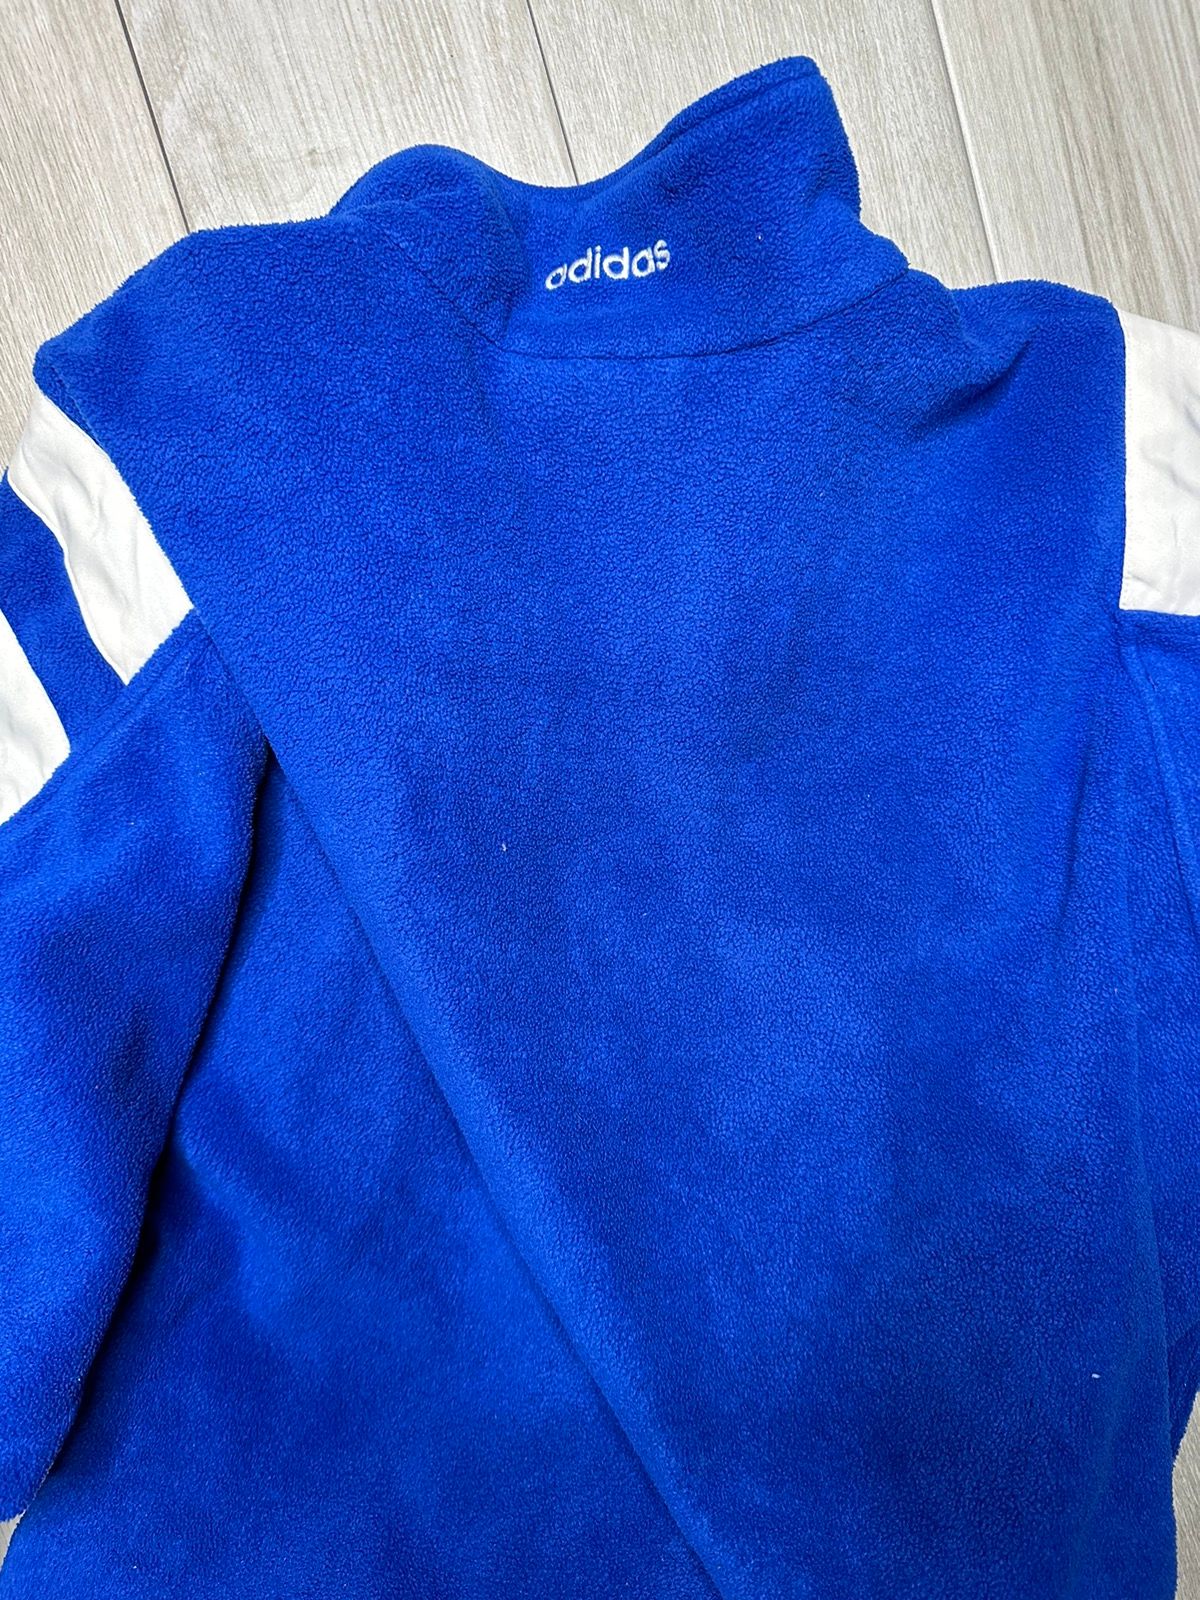 Adidas Vintage Adidas Fleece Pullover Jacket Size US XL / EU 56 / 4 - 4 Preview